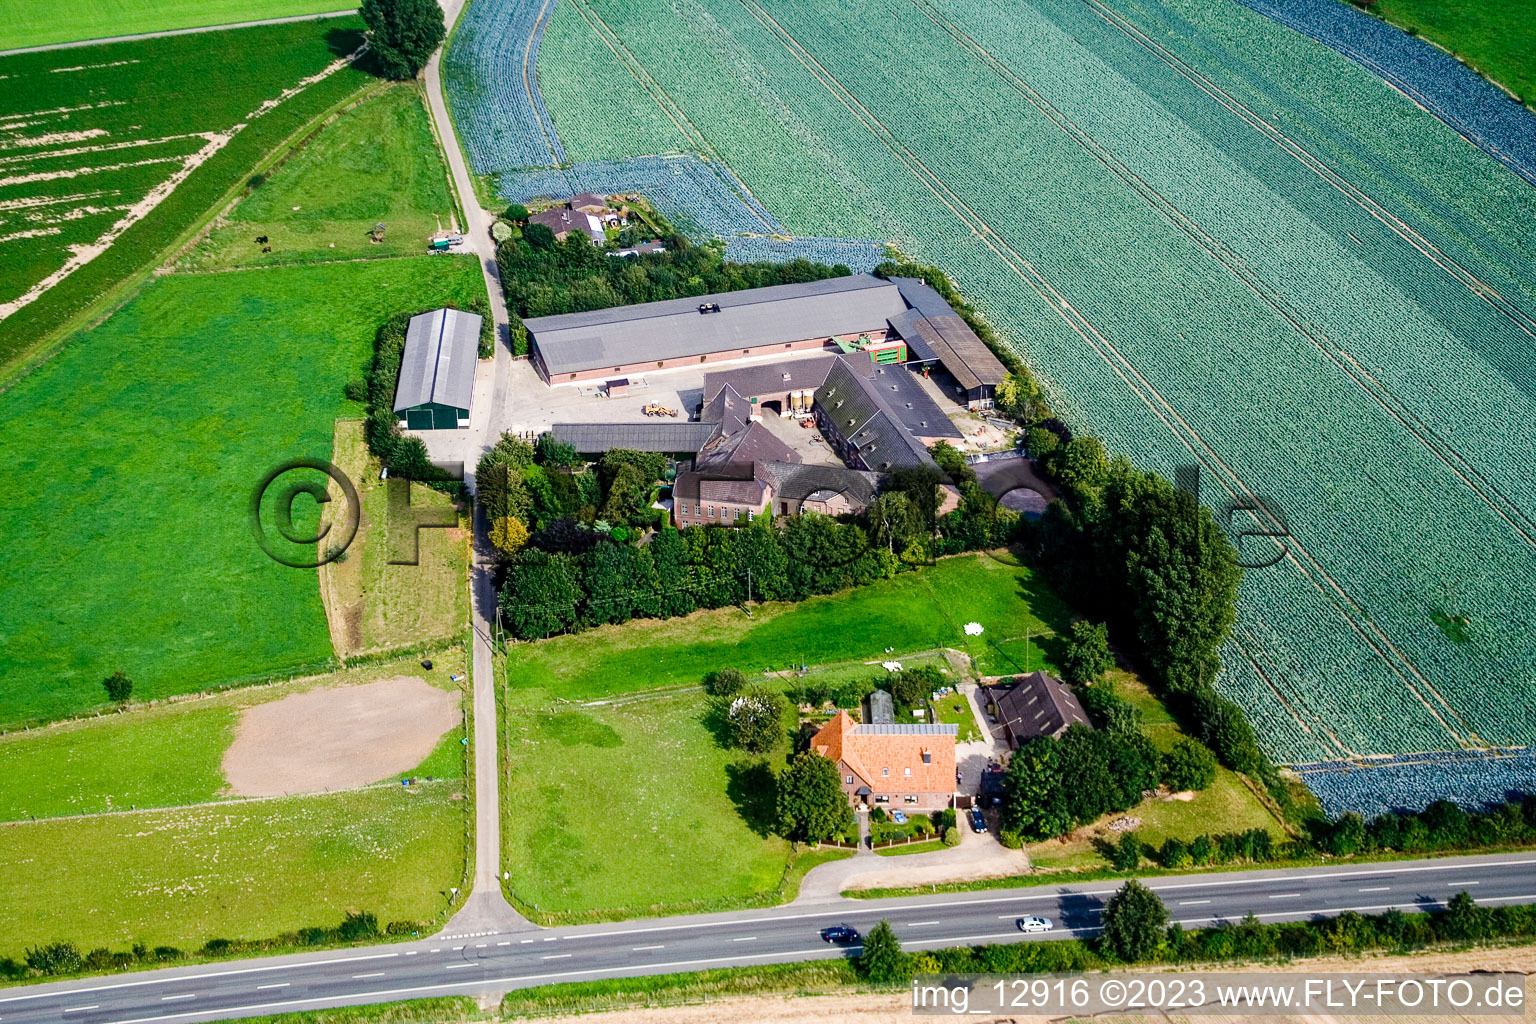 Between Kerken and Limburg in Kerken in the state North Rhine-Westphalia, Germany from the drone perspective